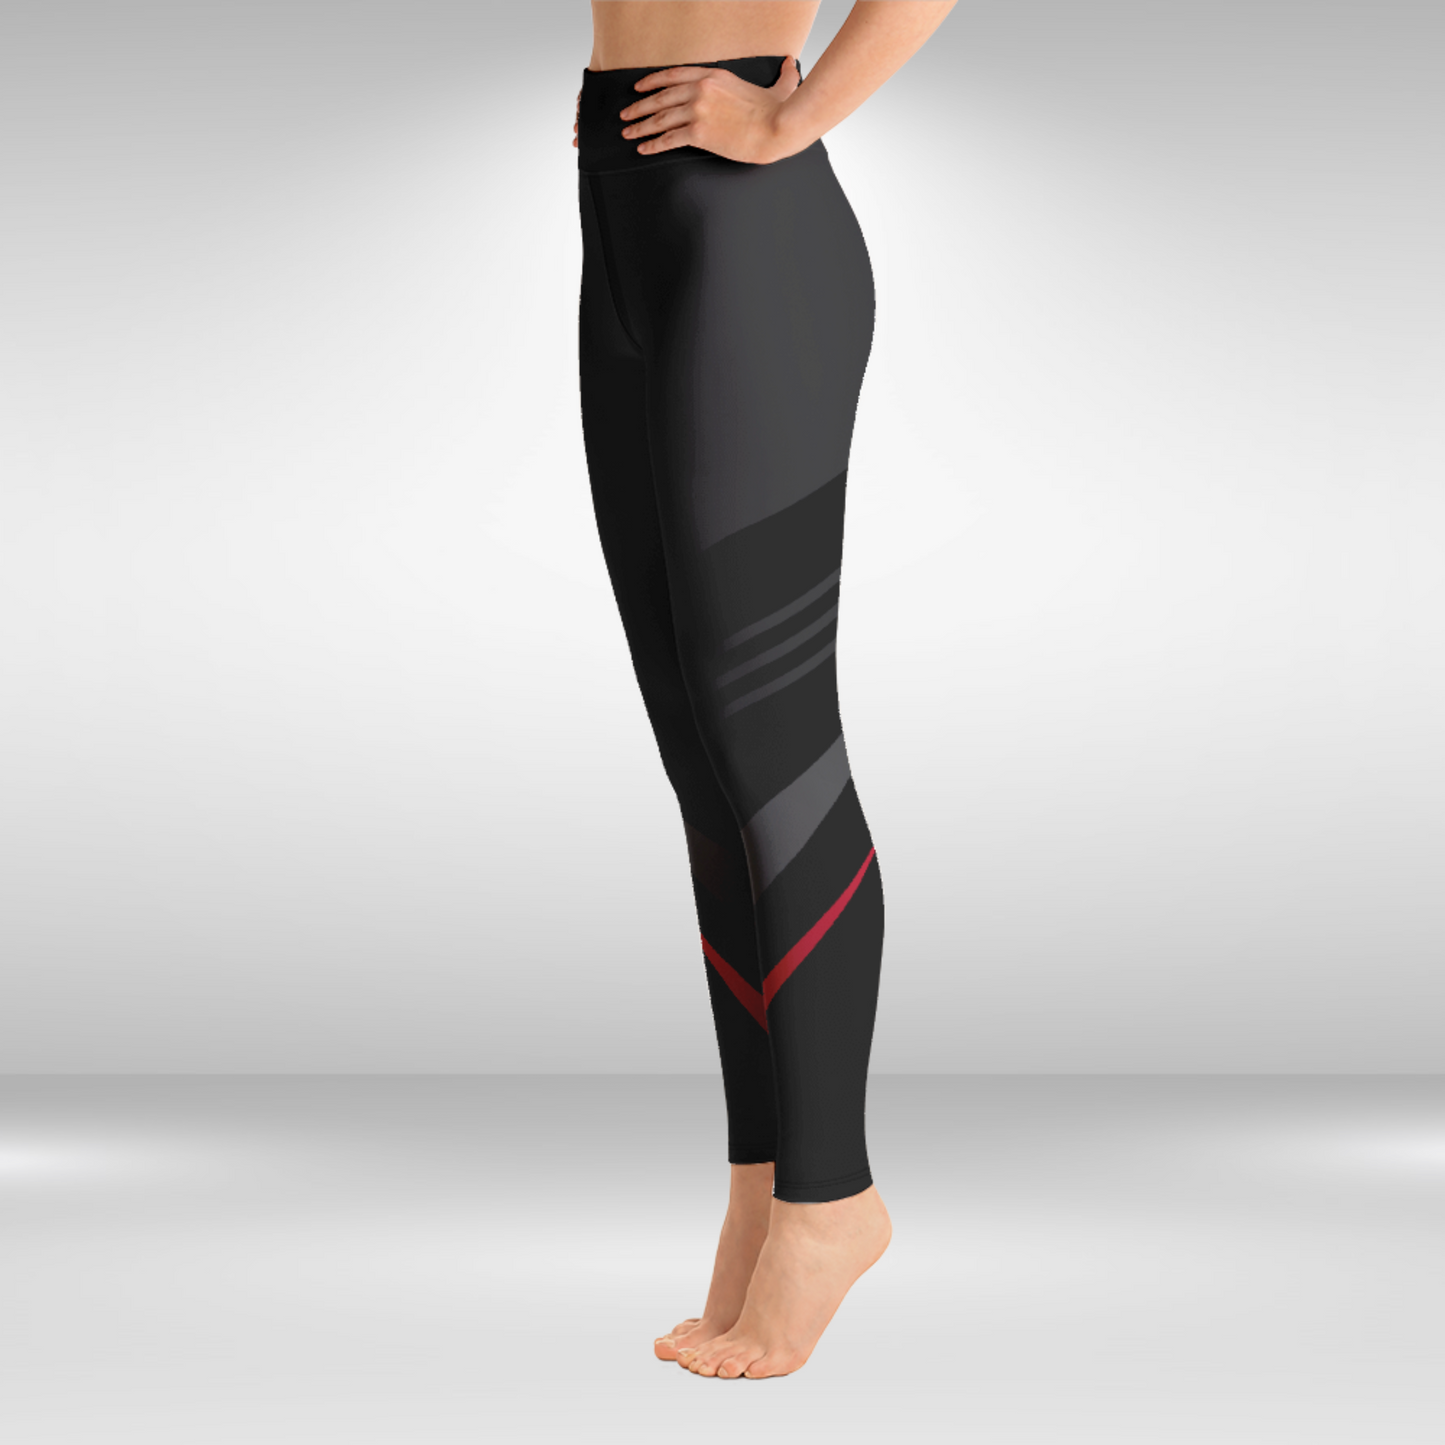 Women Yoga Legging - Black and Red Stripe Print